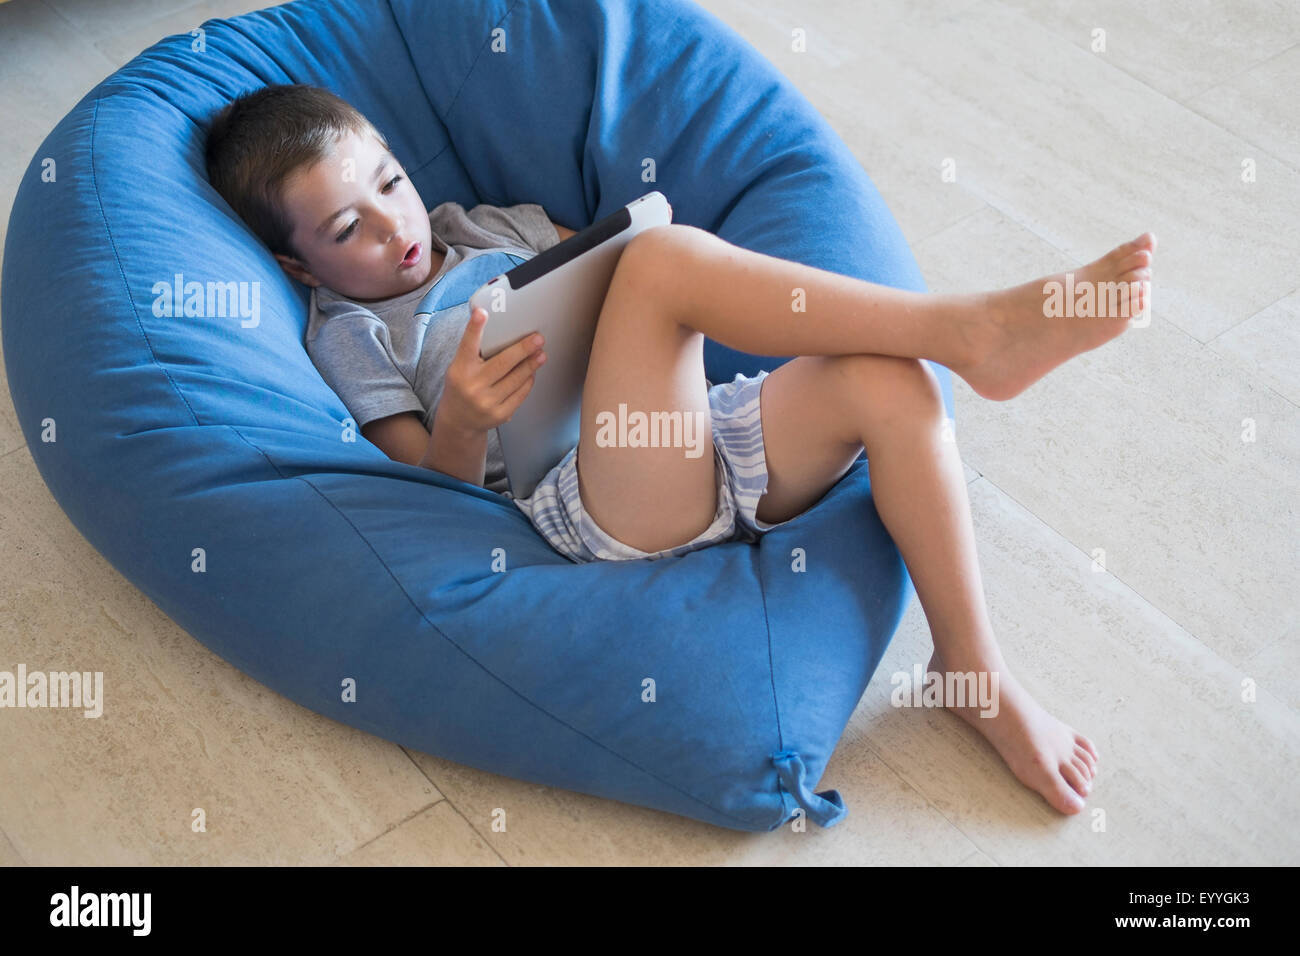 Caucasian boy using digital tablet in beanbag chair Stock Photo